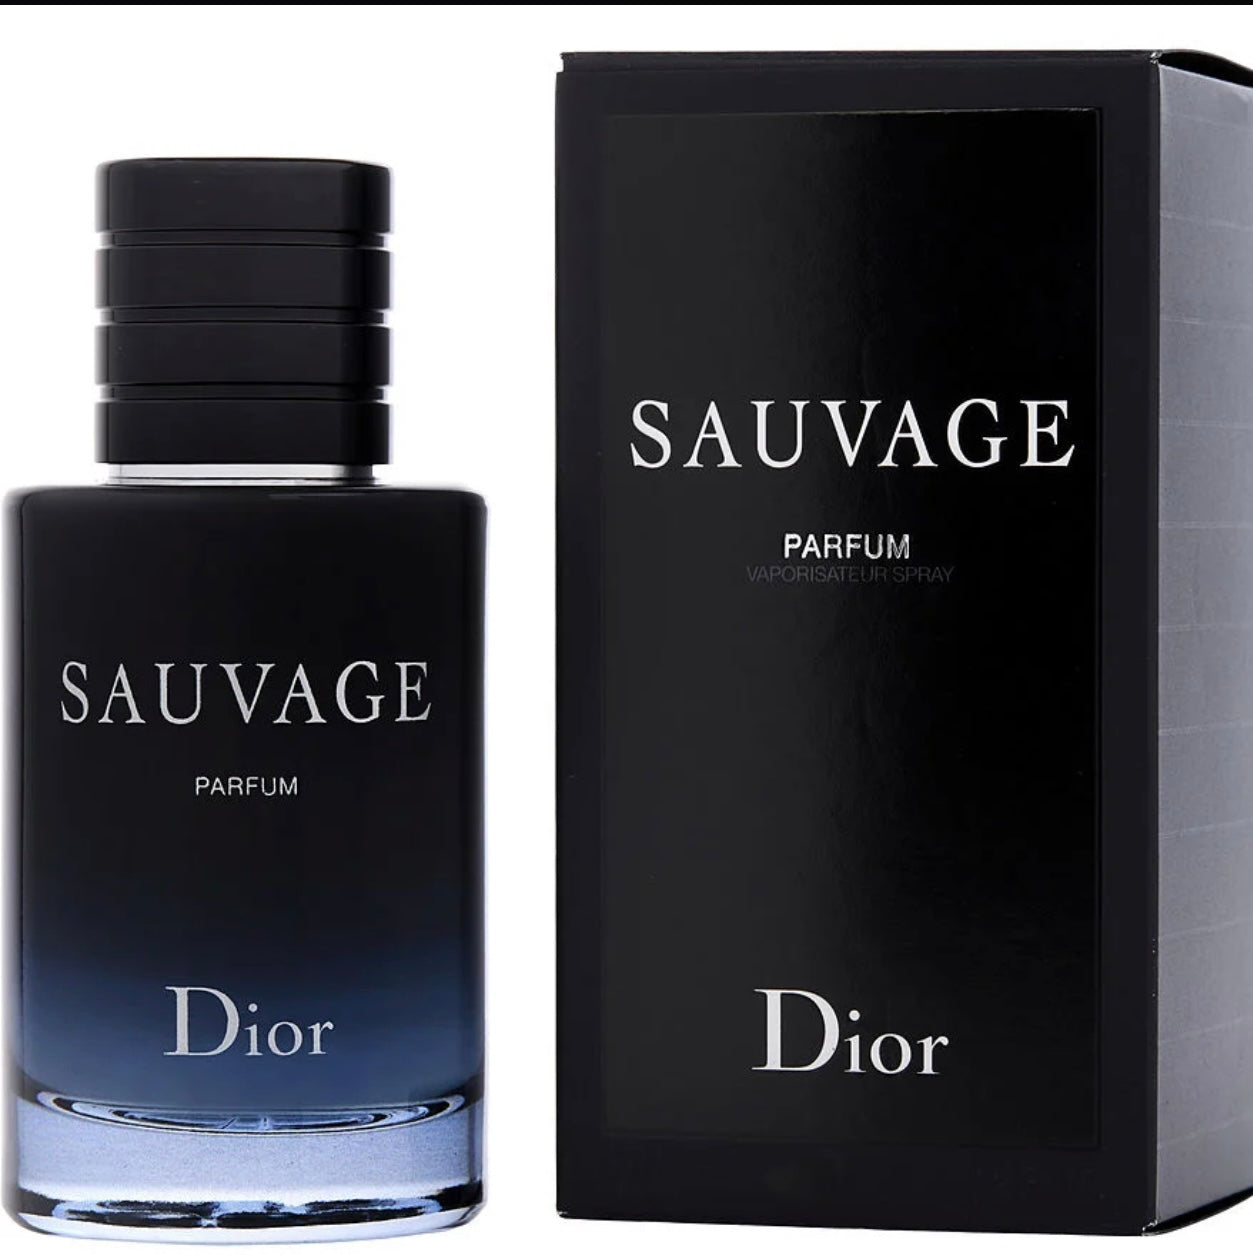 Sauvage Dior Parfum 3.4oz